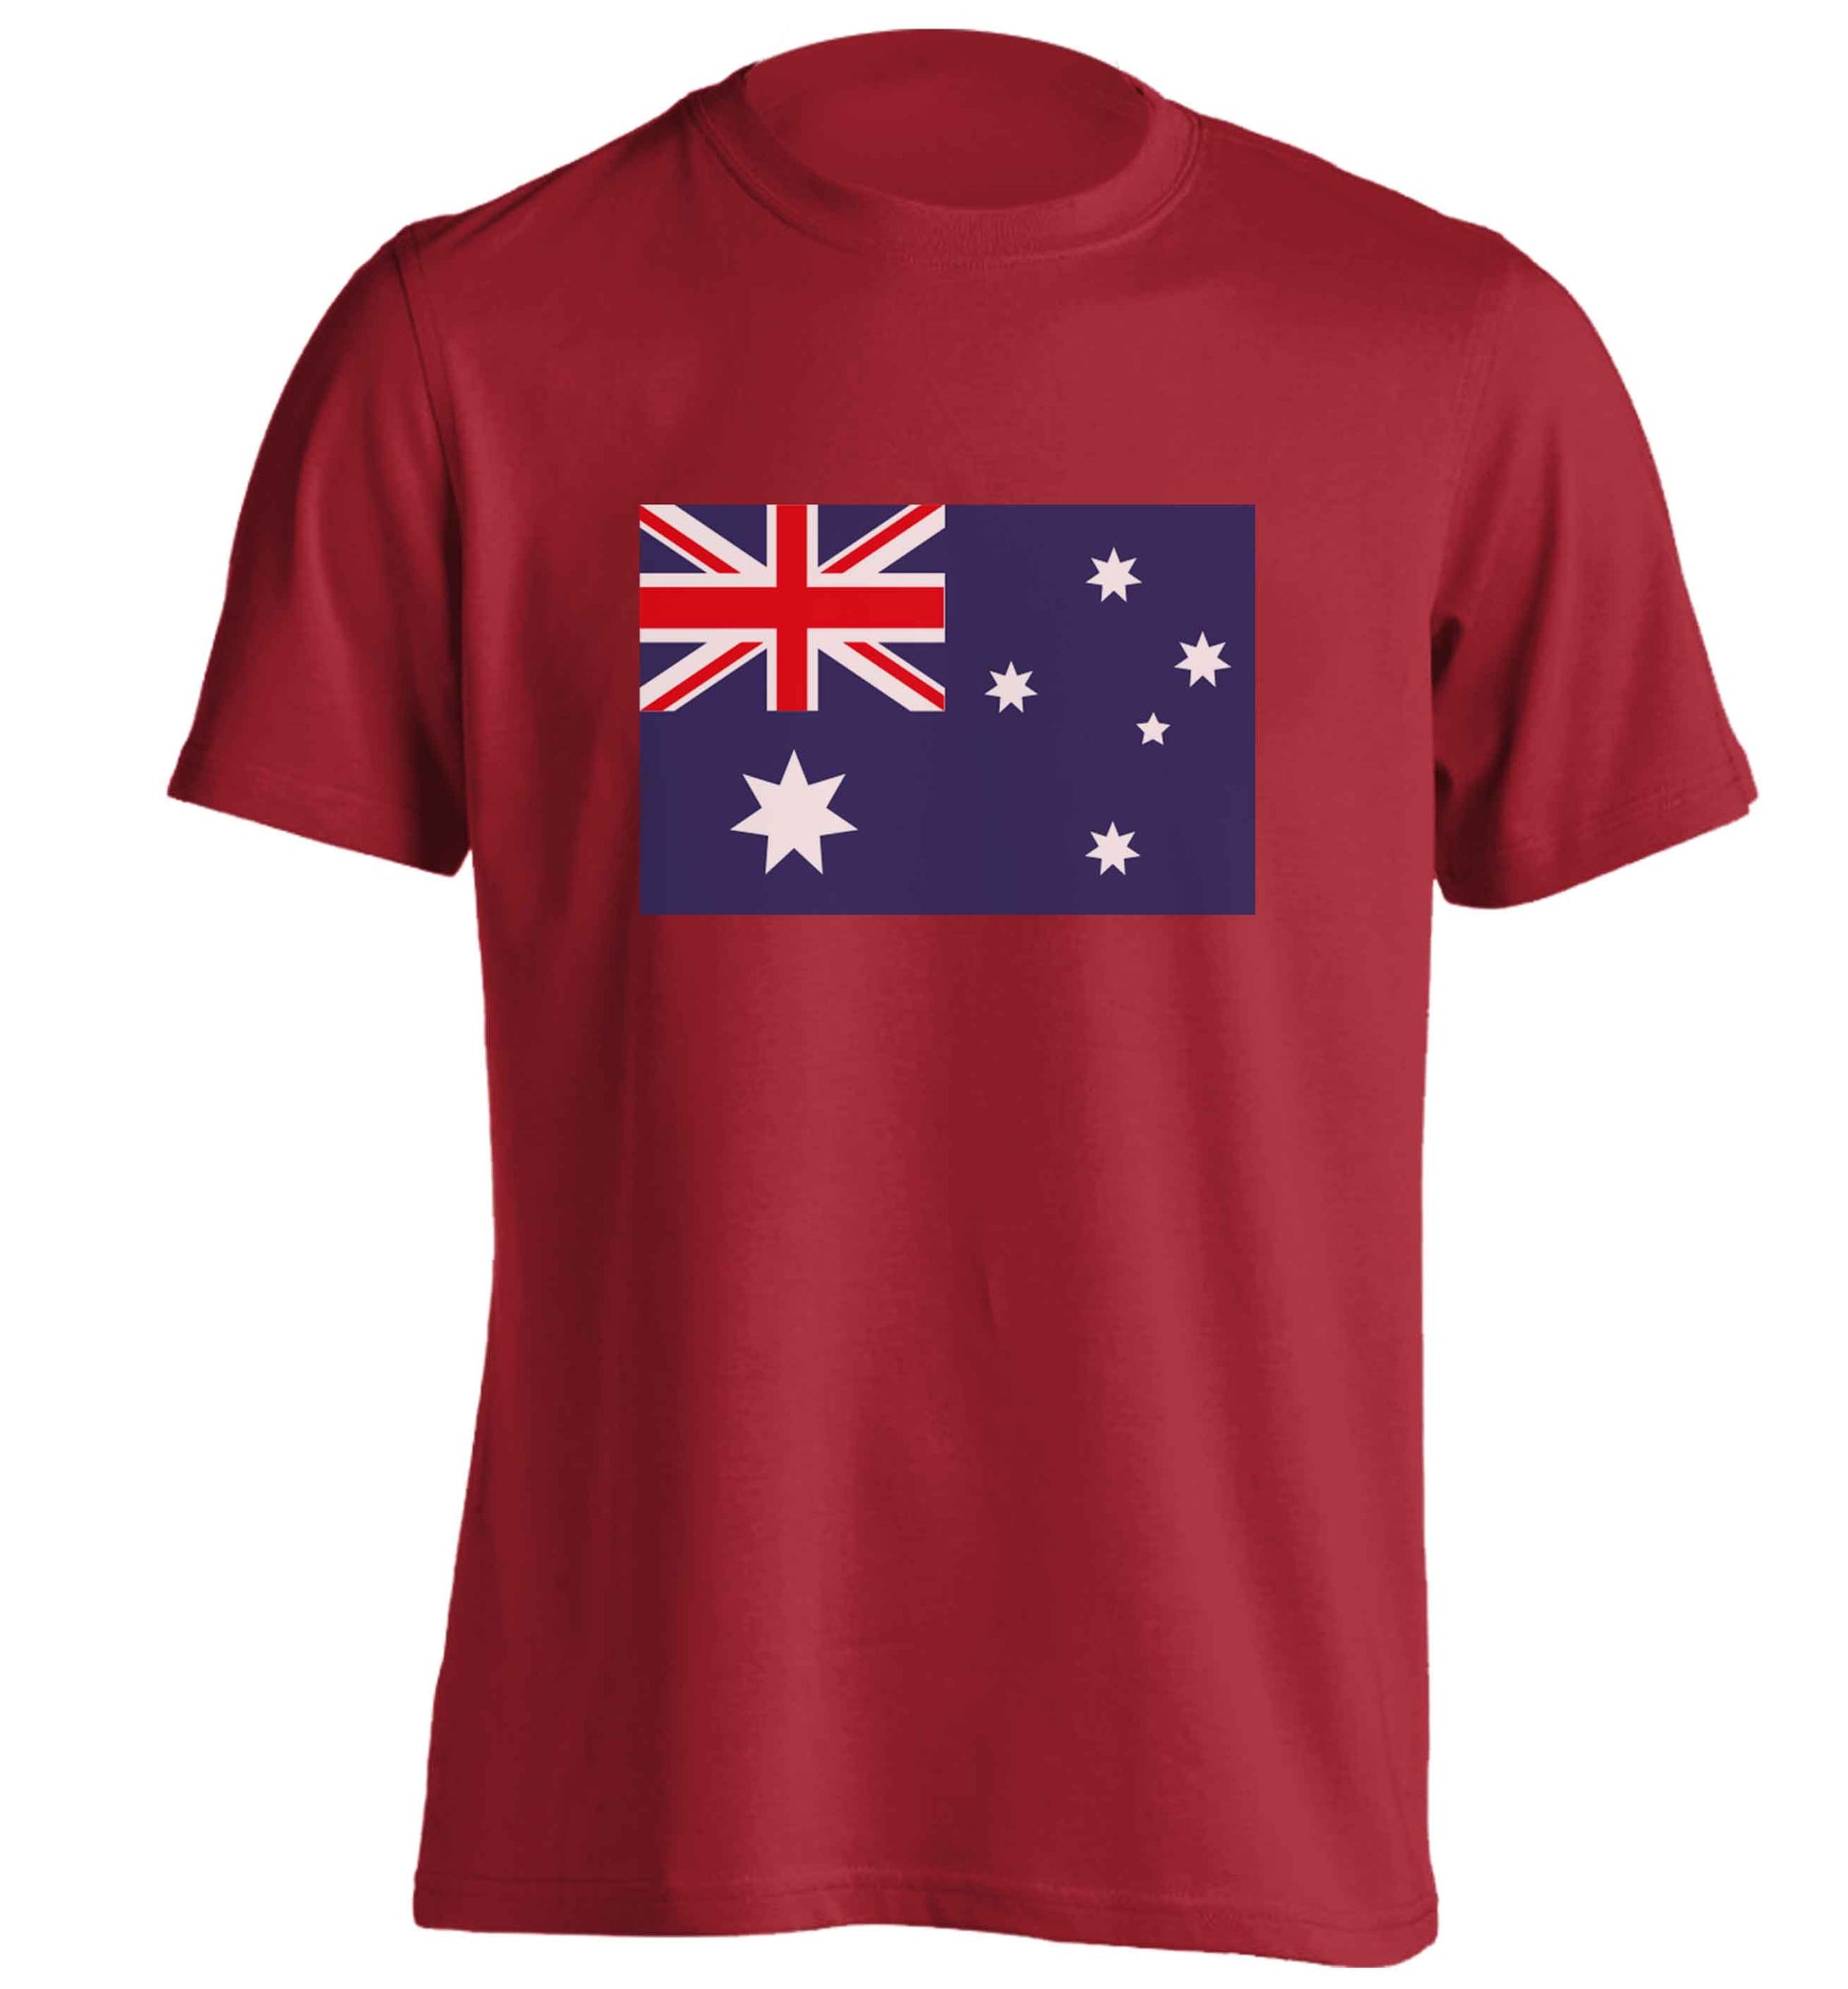 Australian Flag adults unisex red Tshirt 2XL